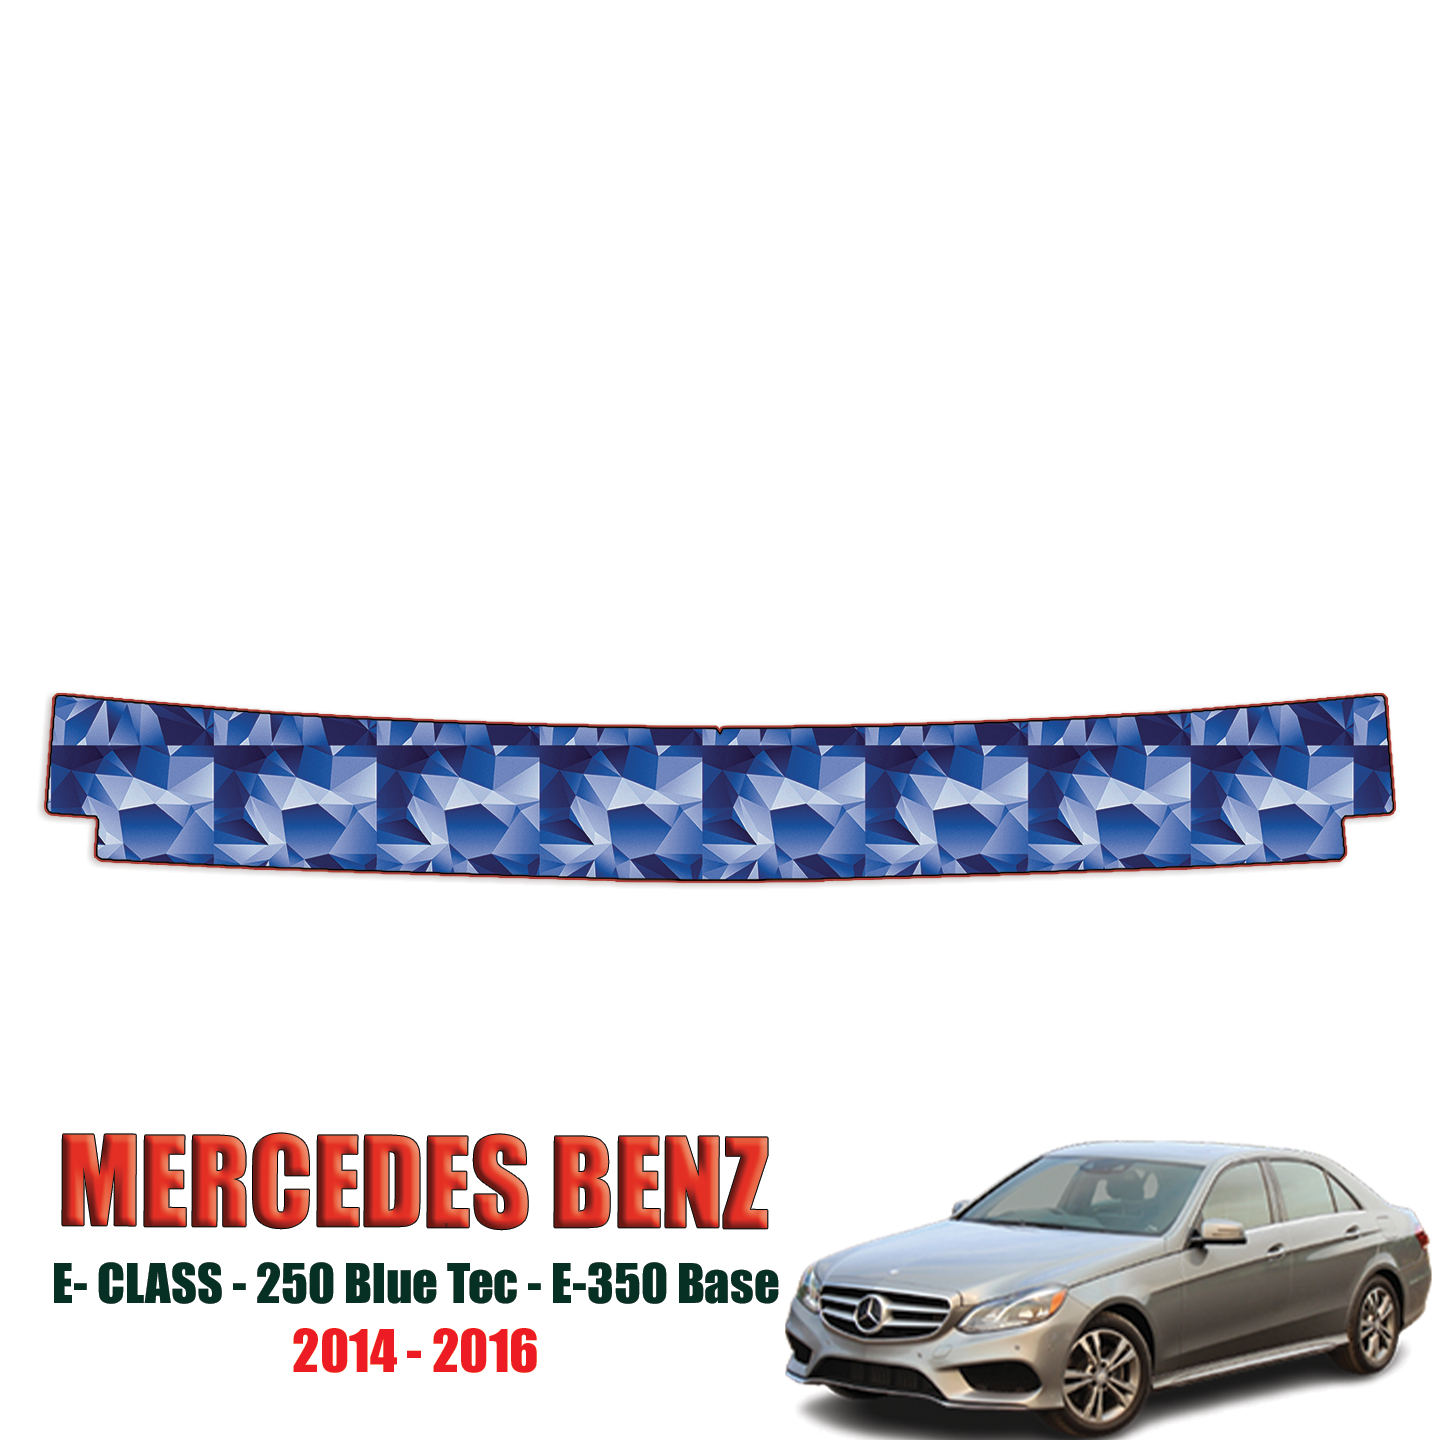 2014-2016 Mercedes Benz E-Class 250 Blue Tec, E 350 Base Precut Paint Protection Kit – Bumper Step